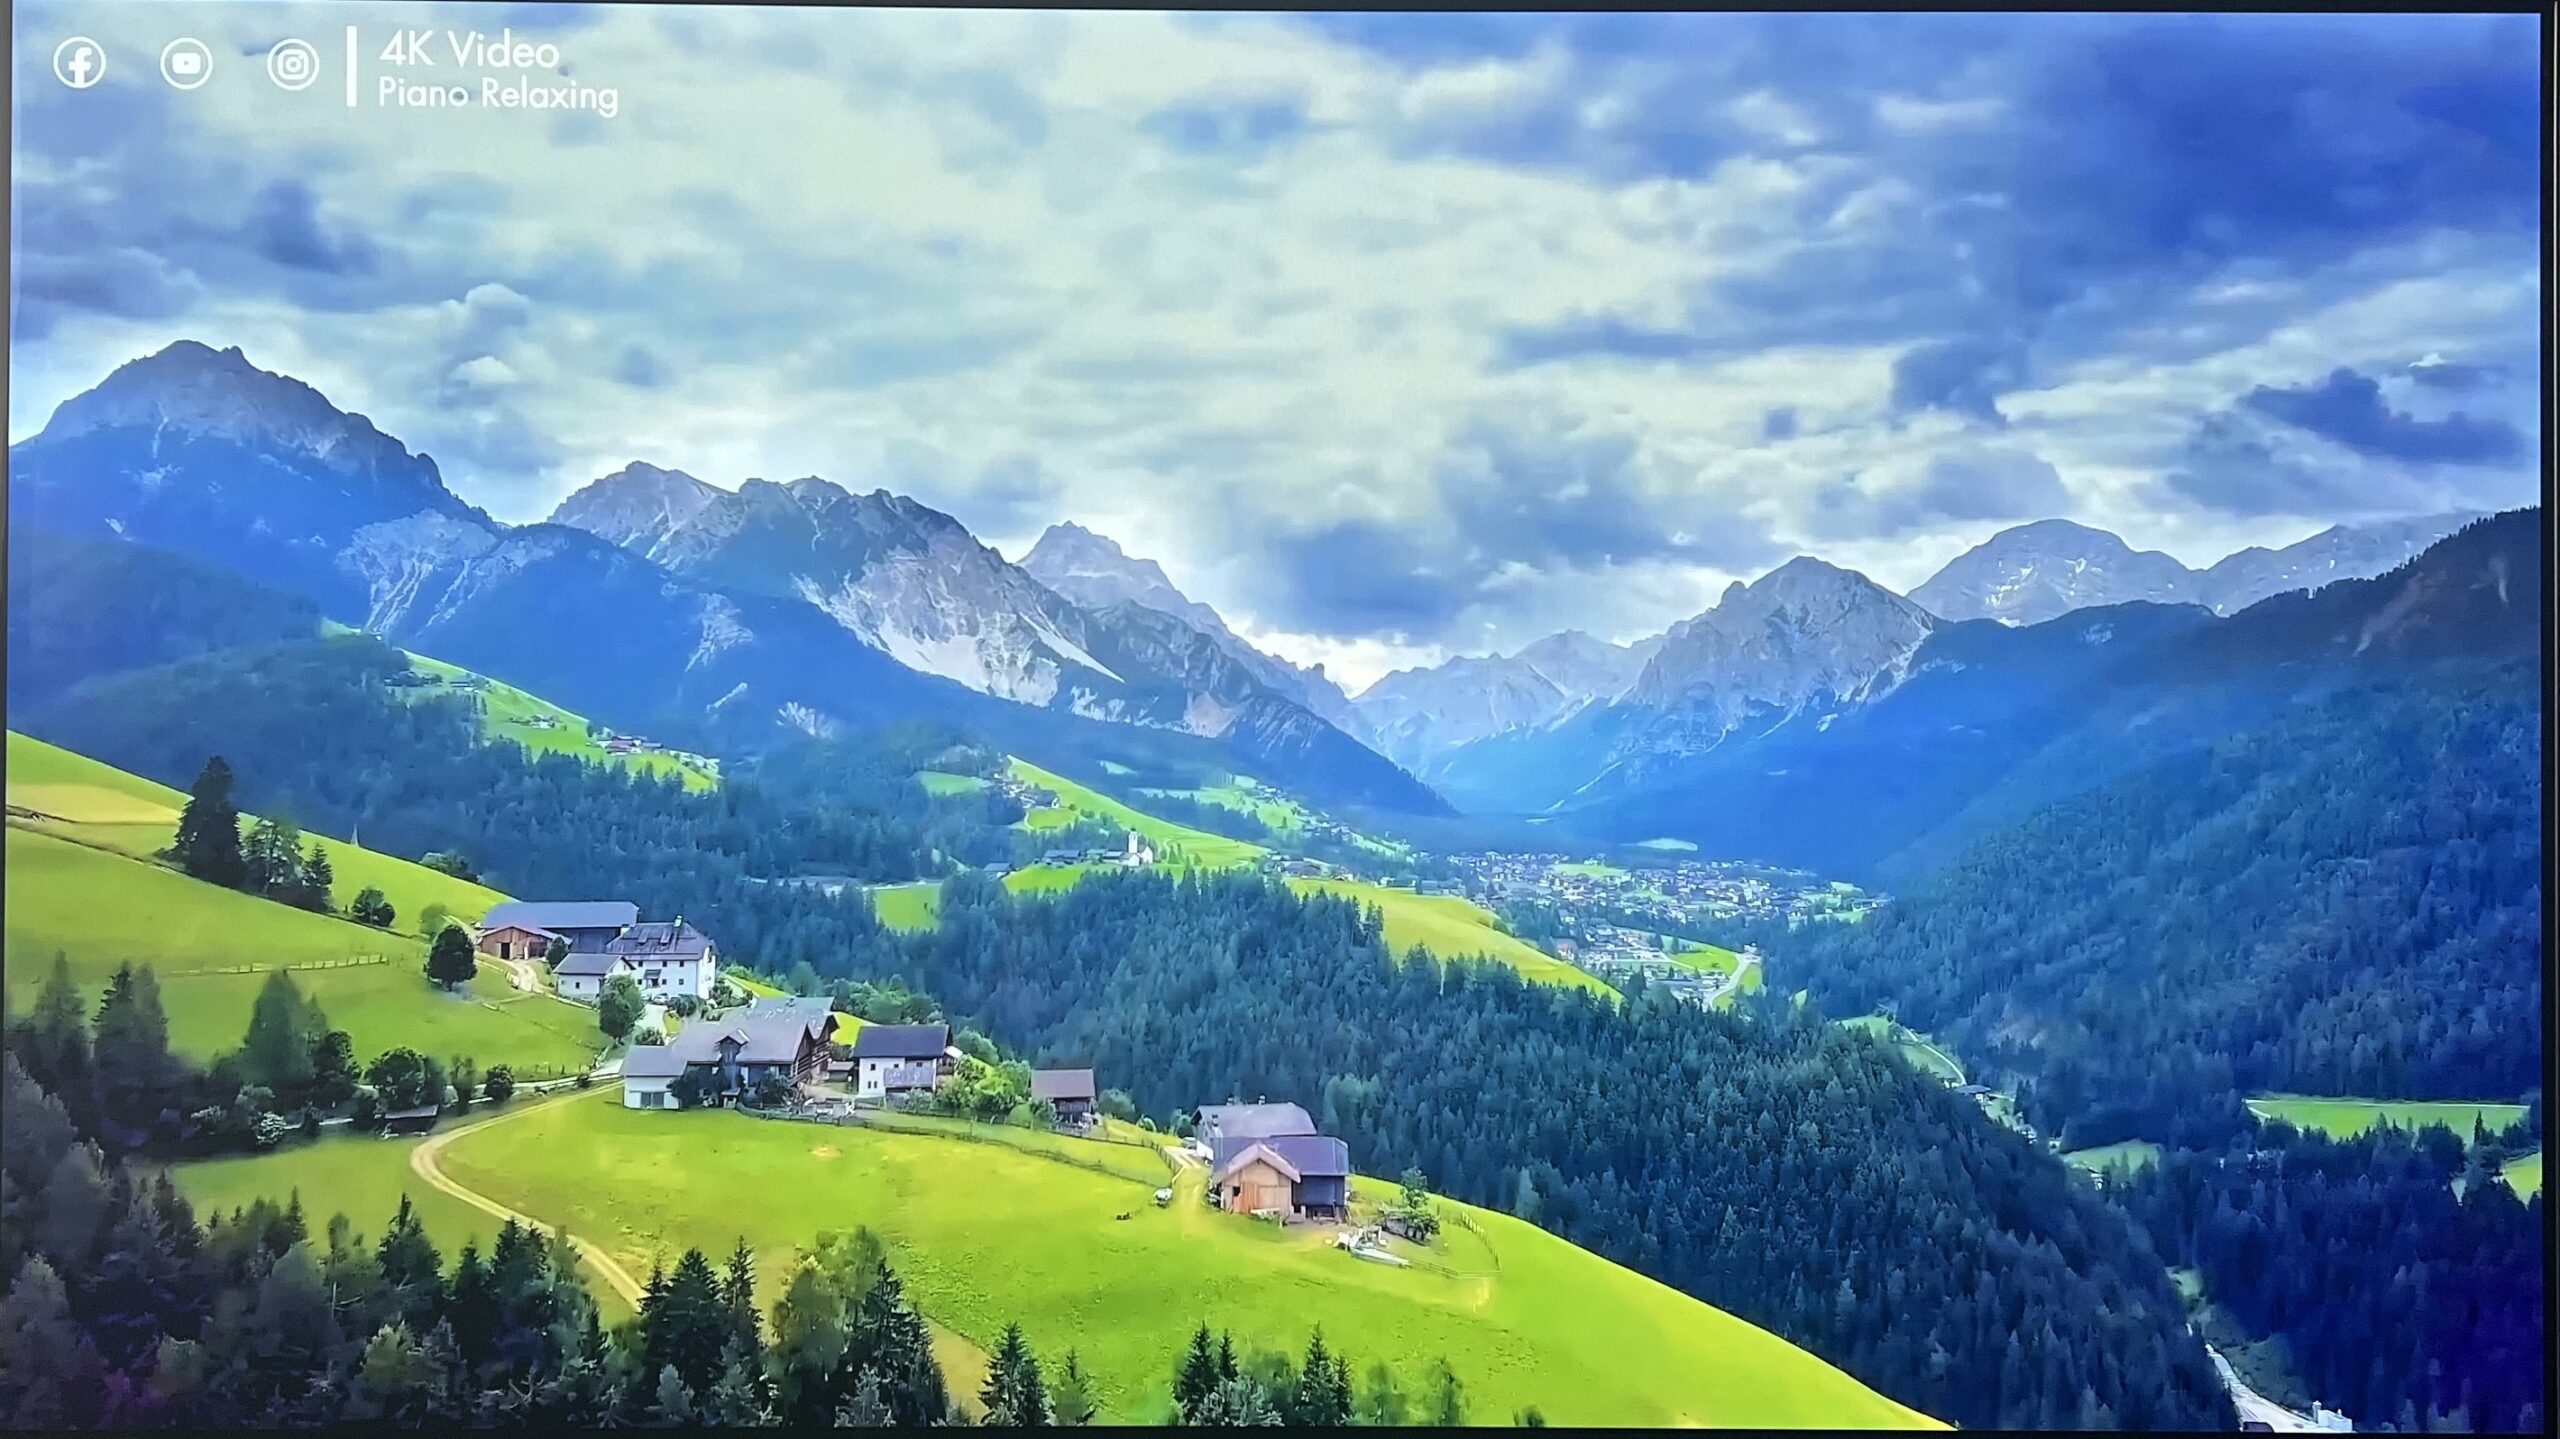 Kadr z filmu YouTube "FLYING OVER SWITZERLAND (4K UHD)" po kalibracji